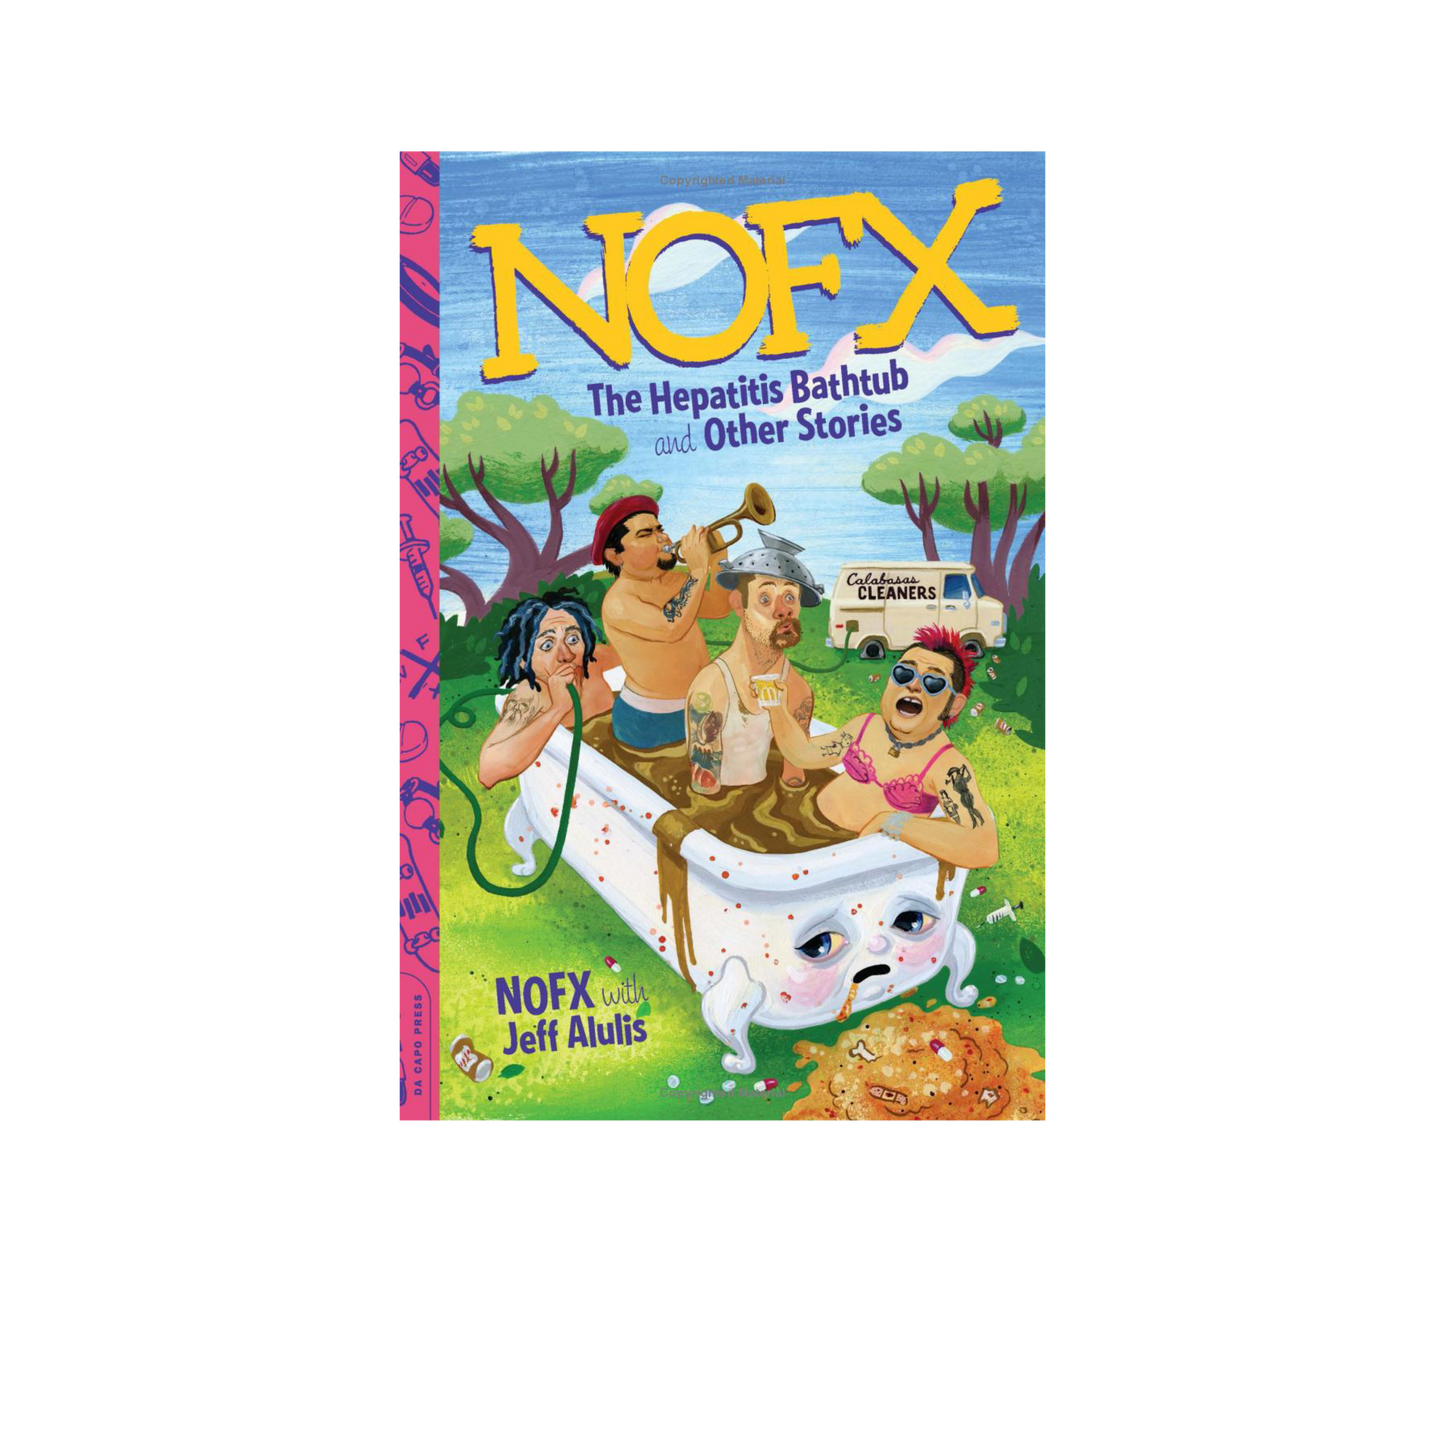 NOFX/Jeff Alulis "NOFX: The Hepatitis Bathtub And Other Stories" Paperback